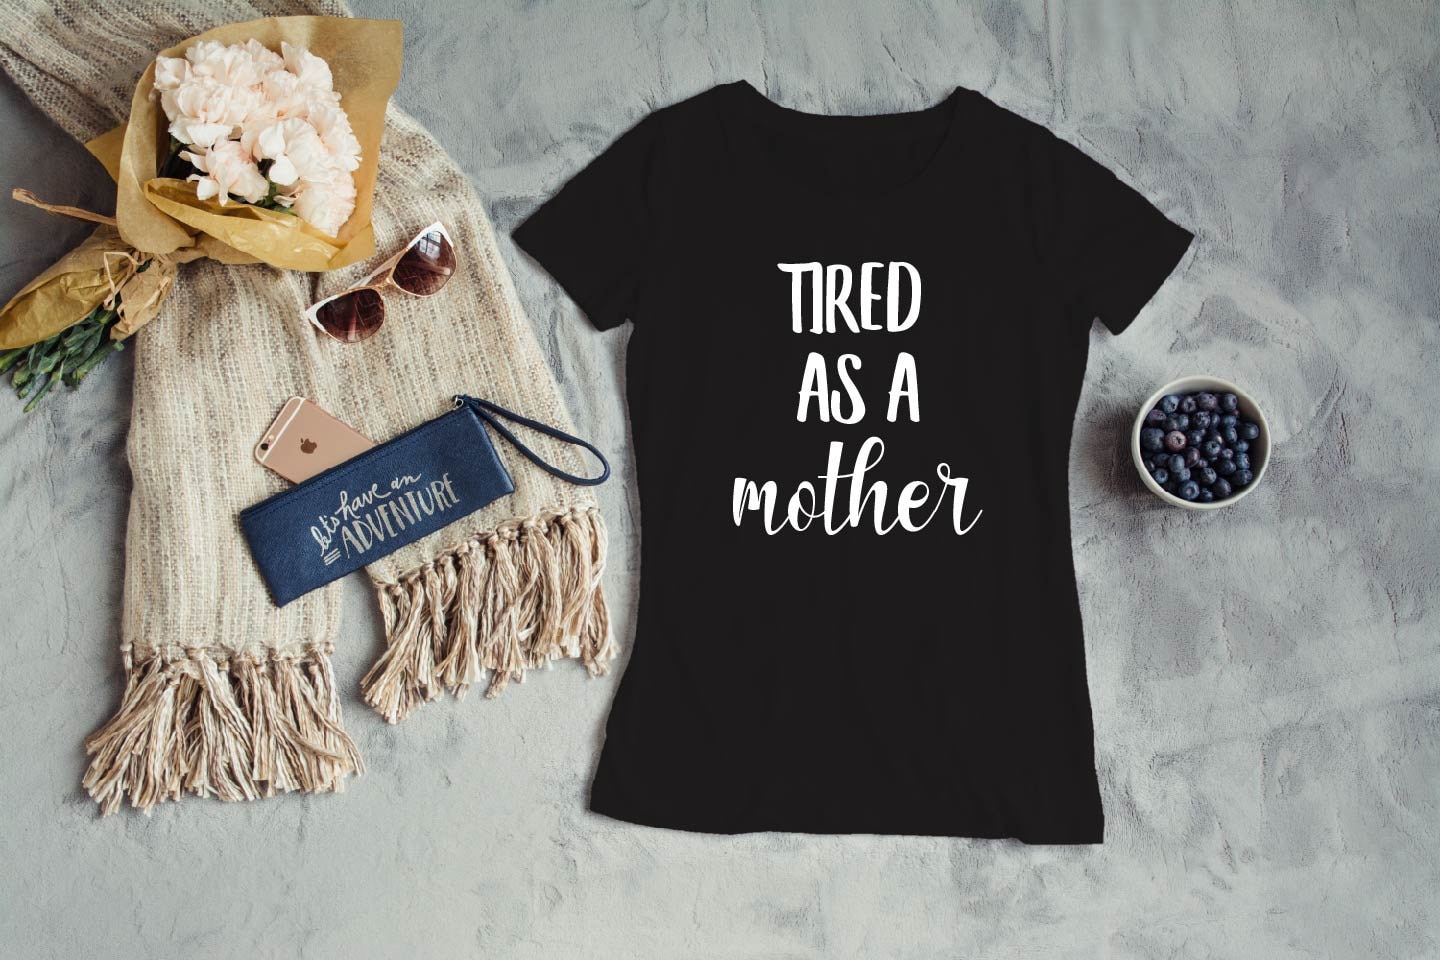 Tired as a Mother Shirt - Women's T Shirt - Funny Women's T Shirt - Graphic T Shirt - Statment T Shirt - Women's Shirt - Top - Mom T Shirt